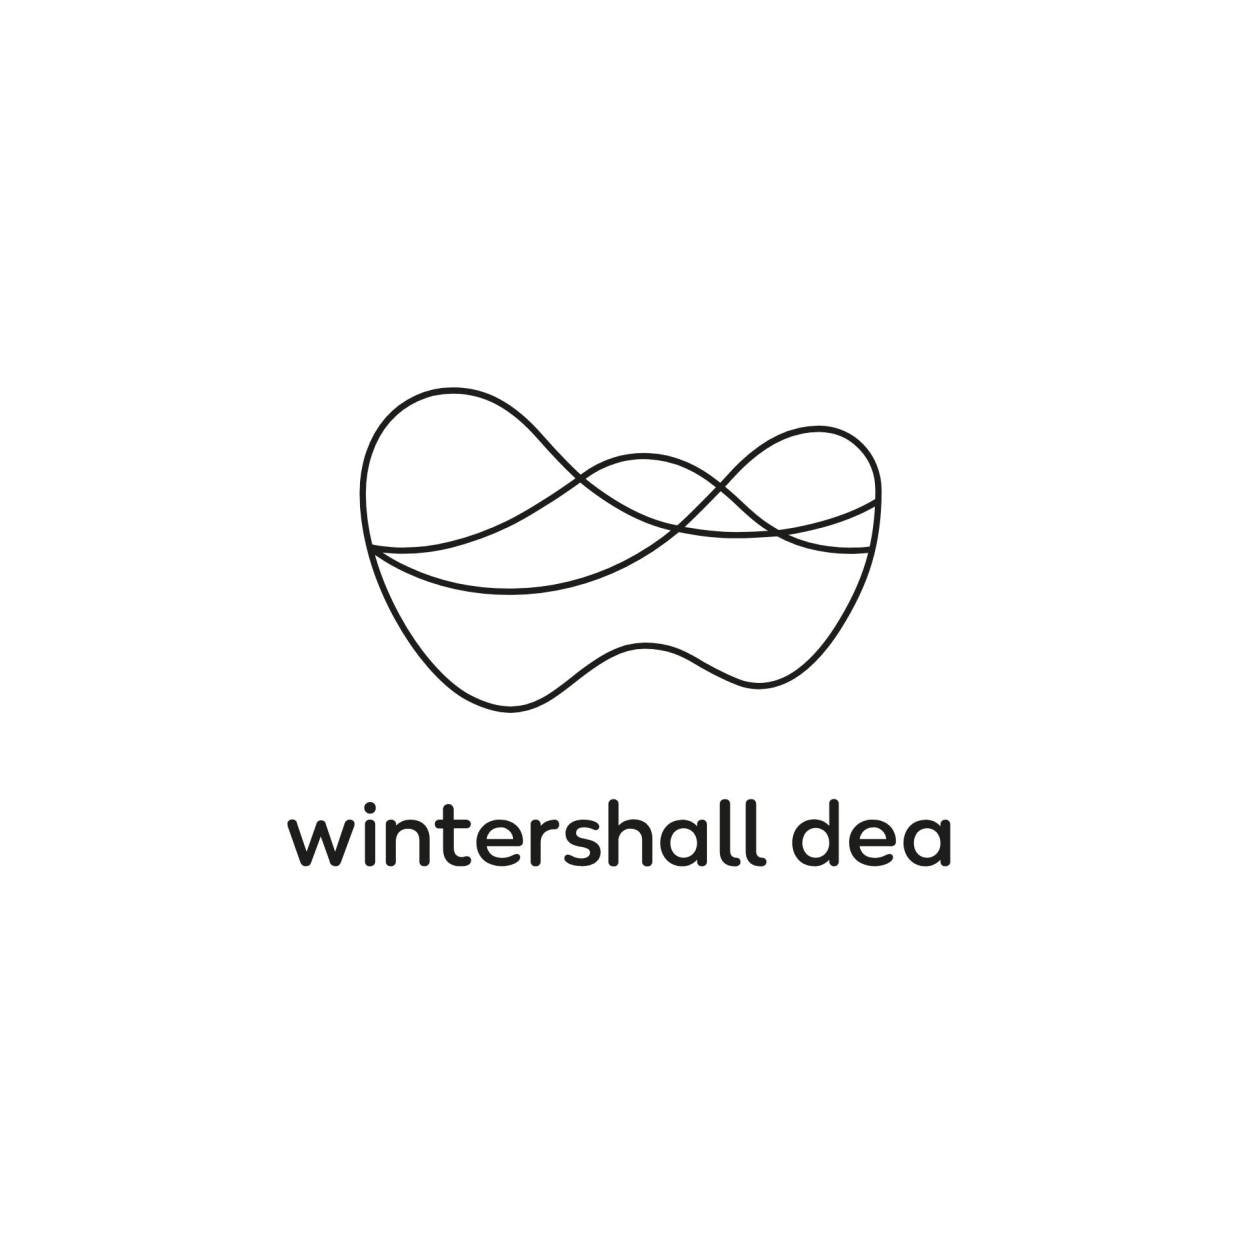 Wintershall dea logo